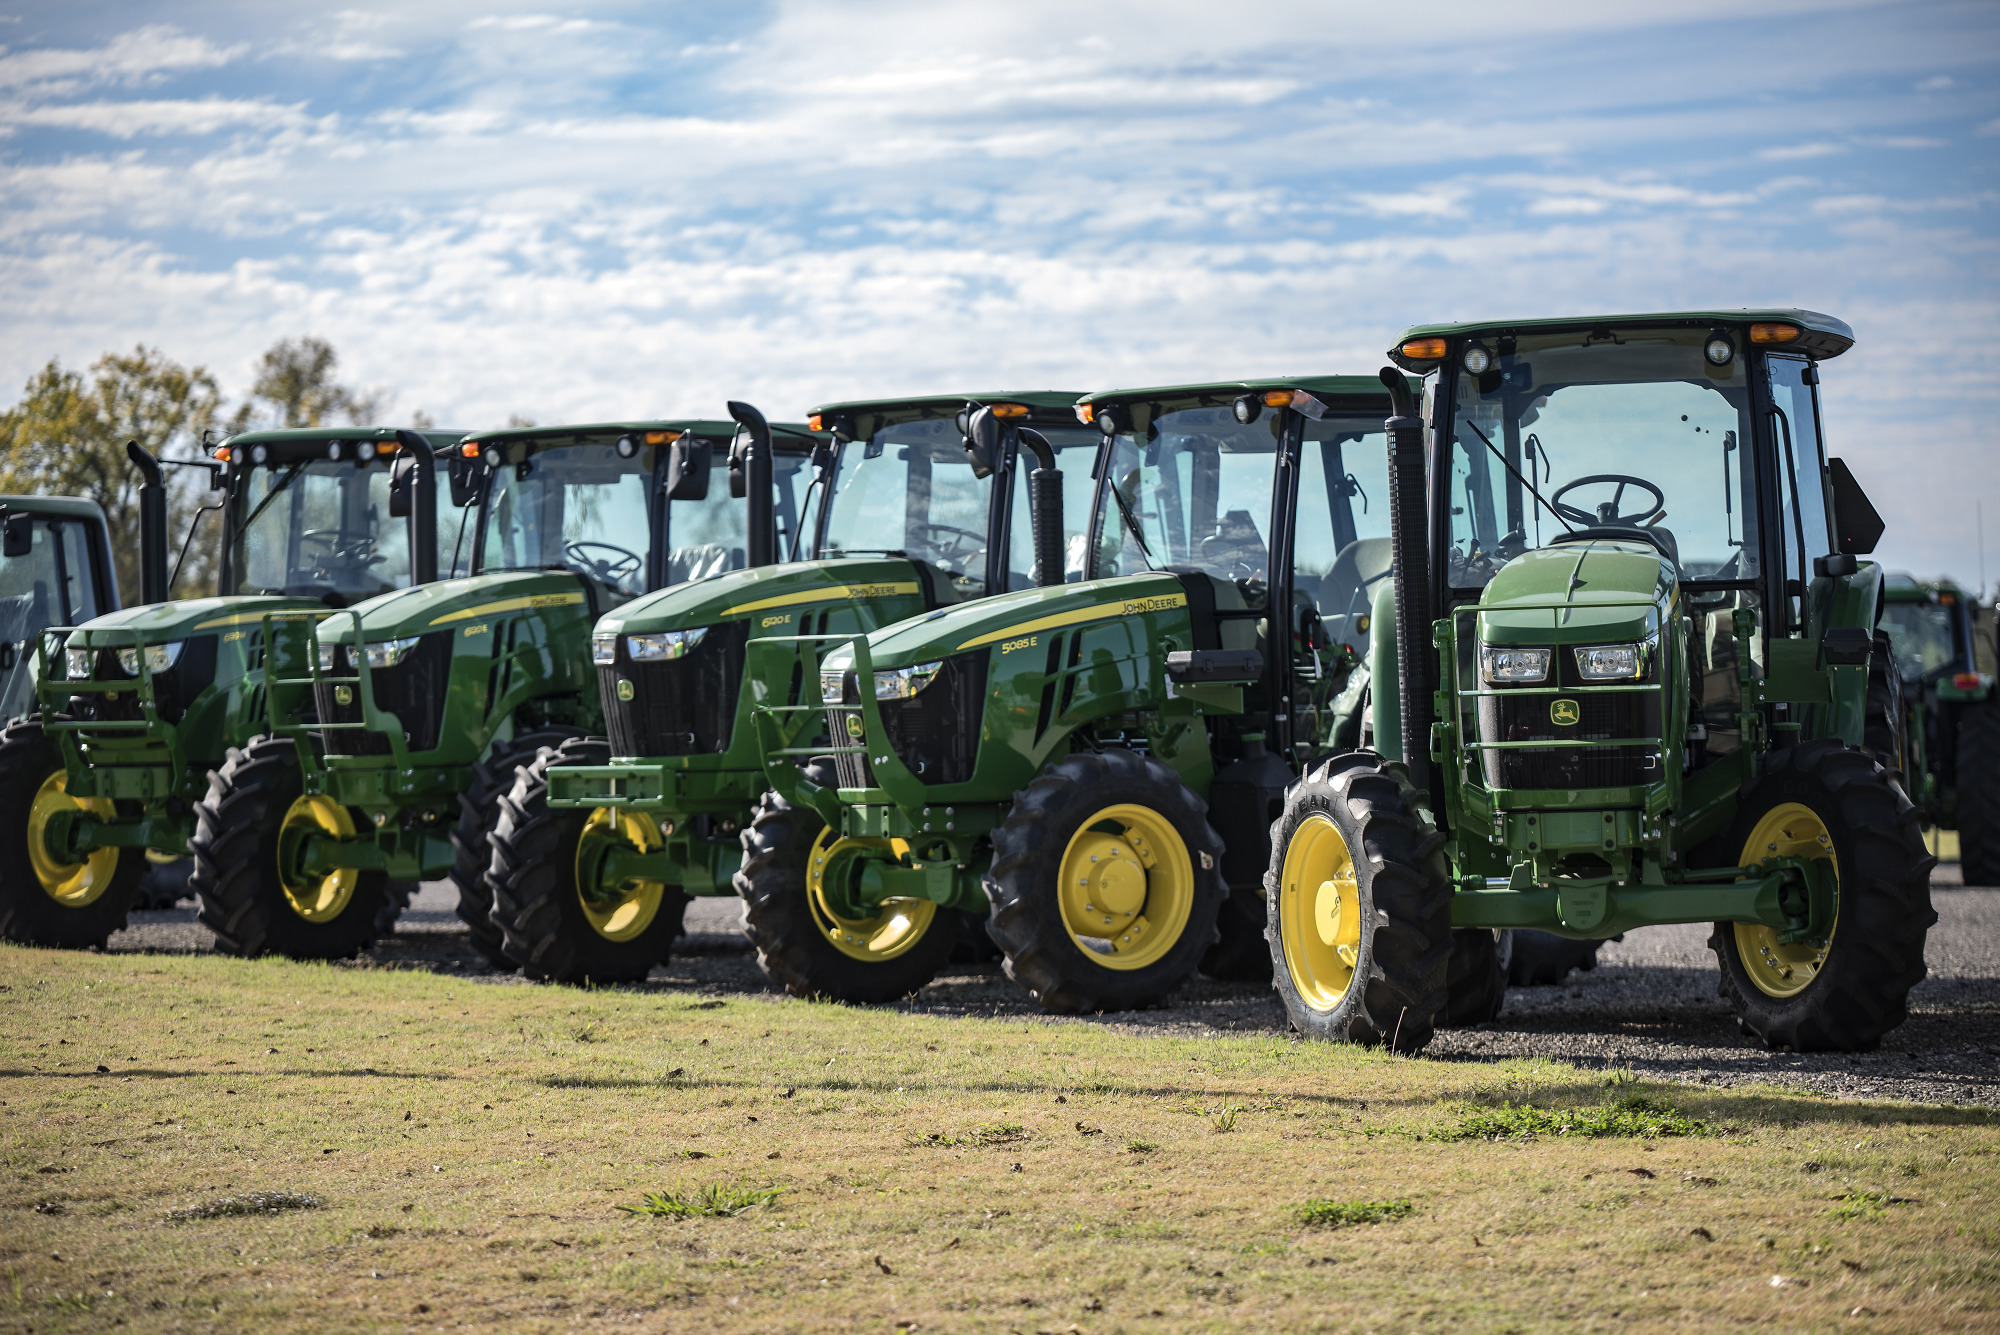 Deere & Co. will allow farmers to repair their own equipment